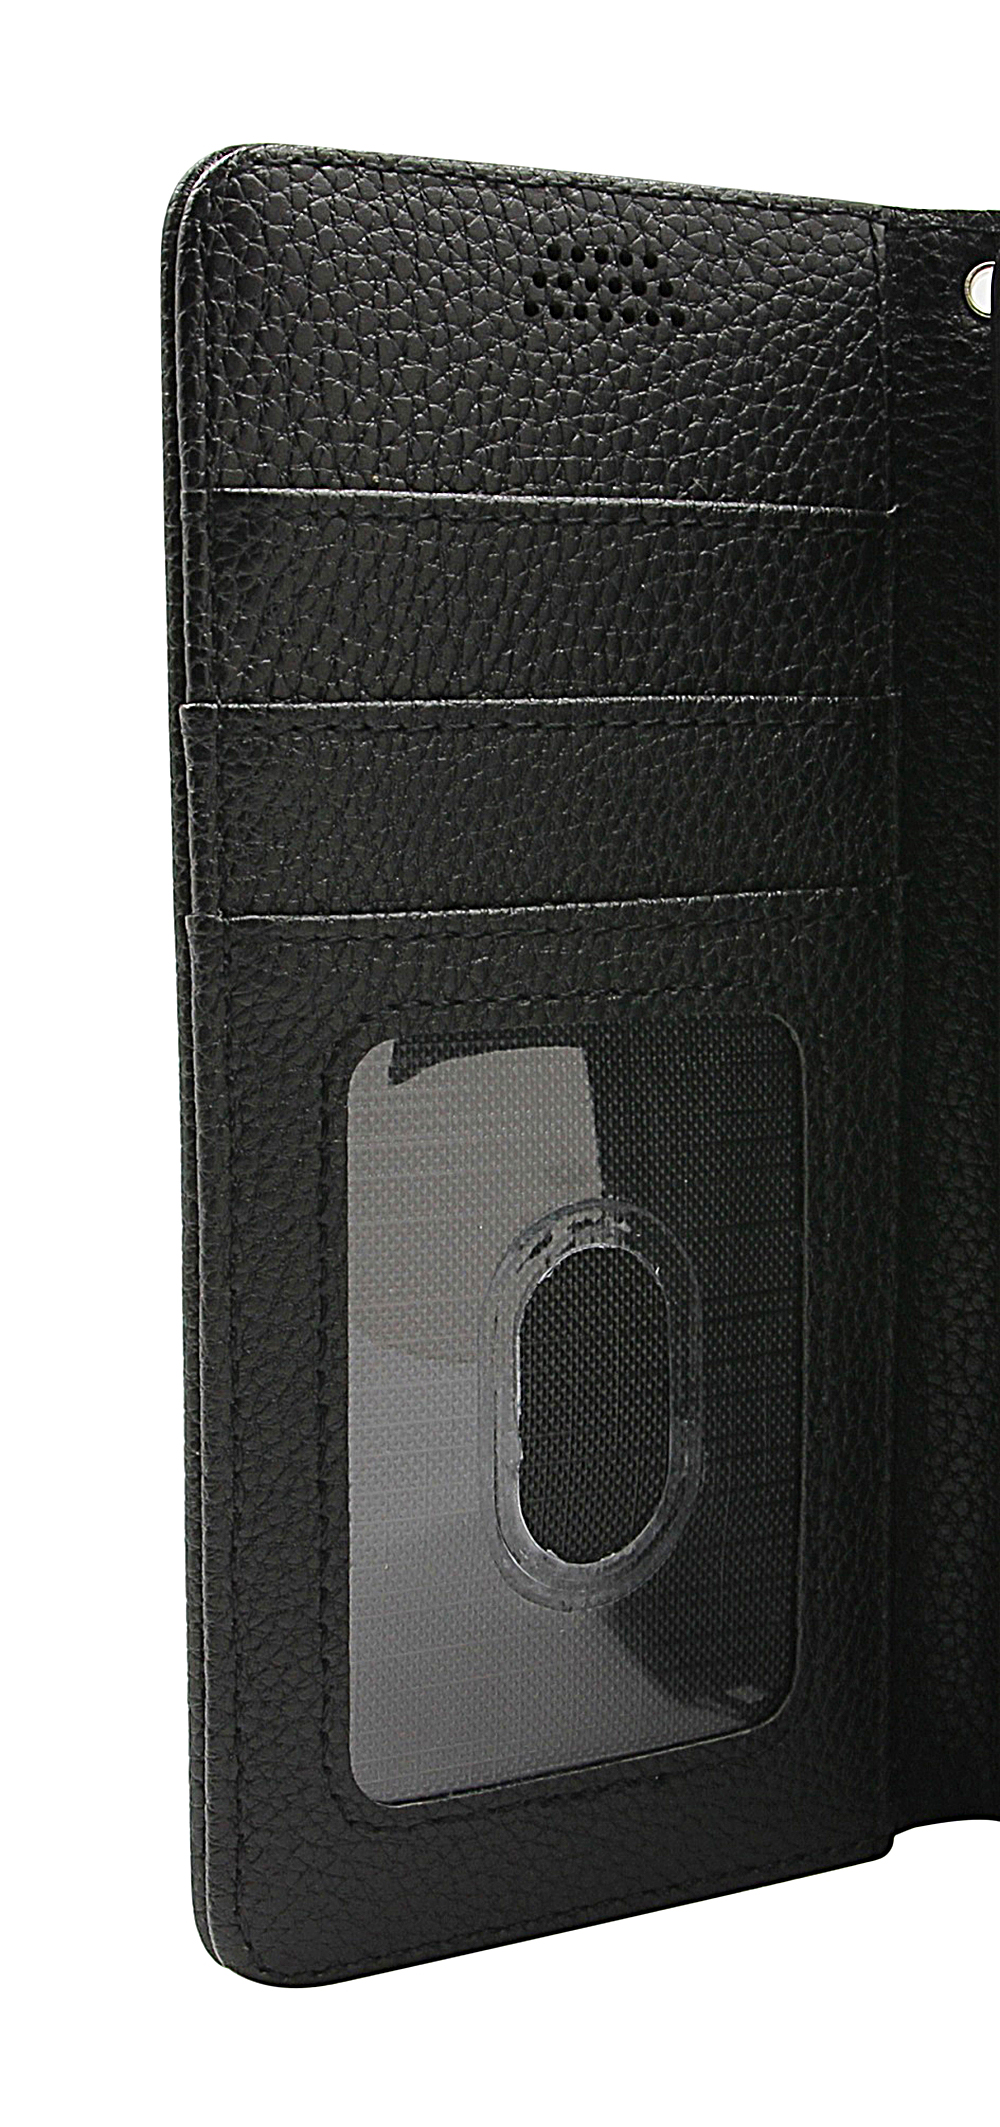 New Standcase Wallet Motorola Moto G8 Power Lite